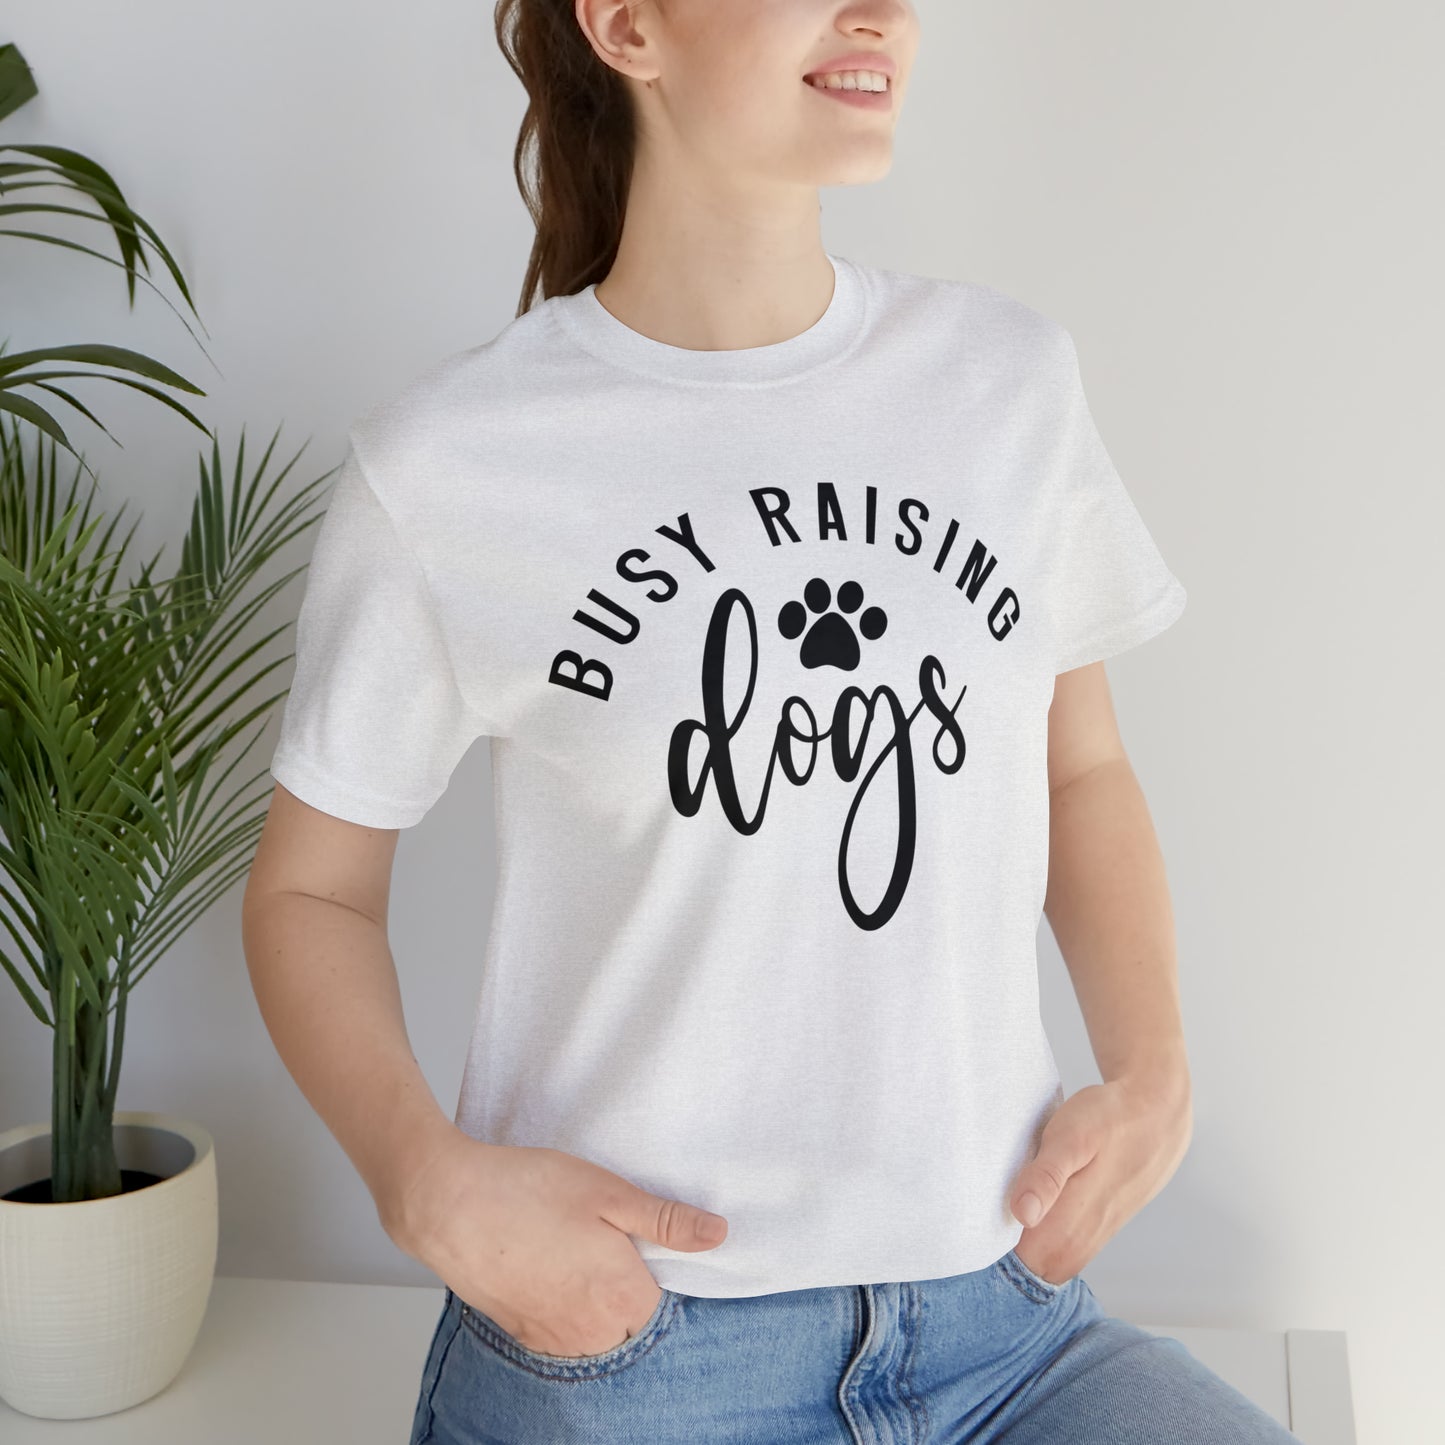 Busy Raising Dogs Short Sleeve T-shirt